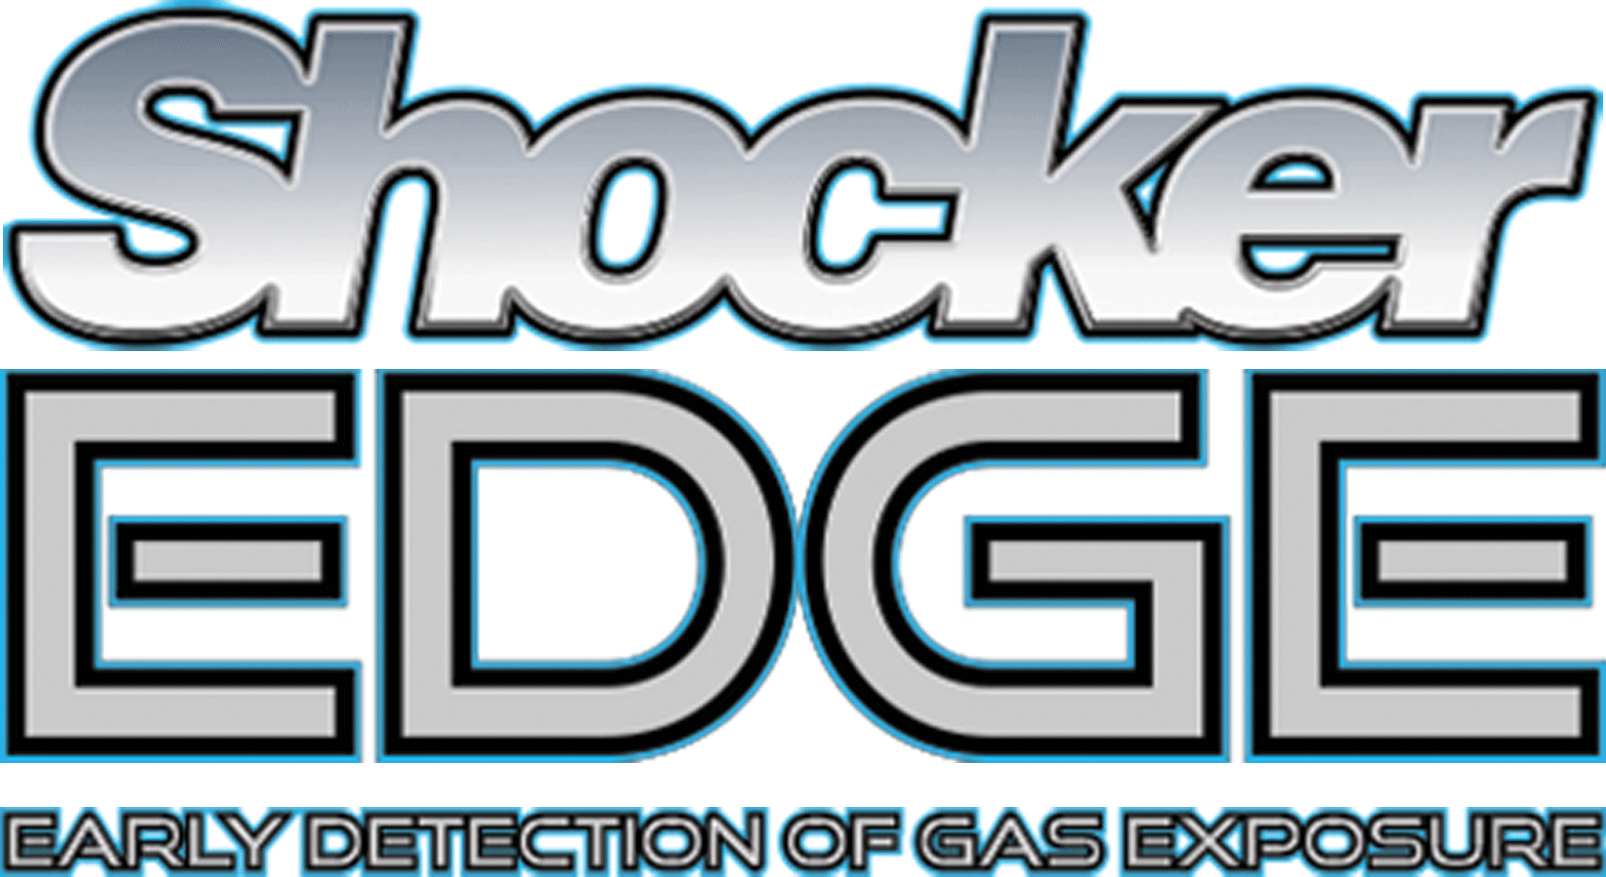 ShockerEDGE Silver Logo2